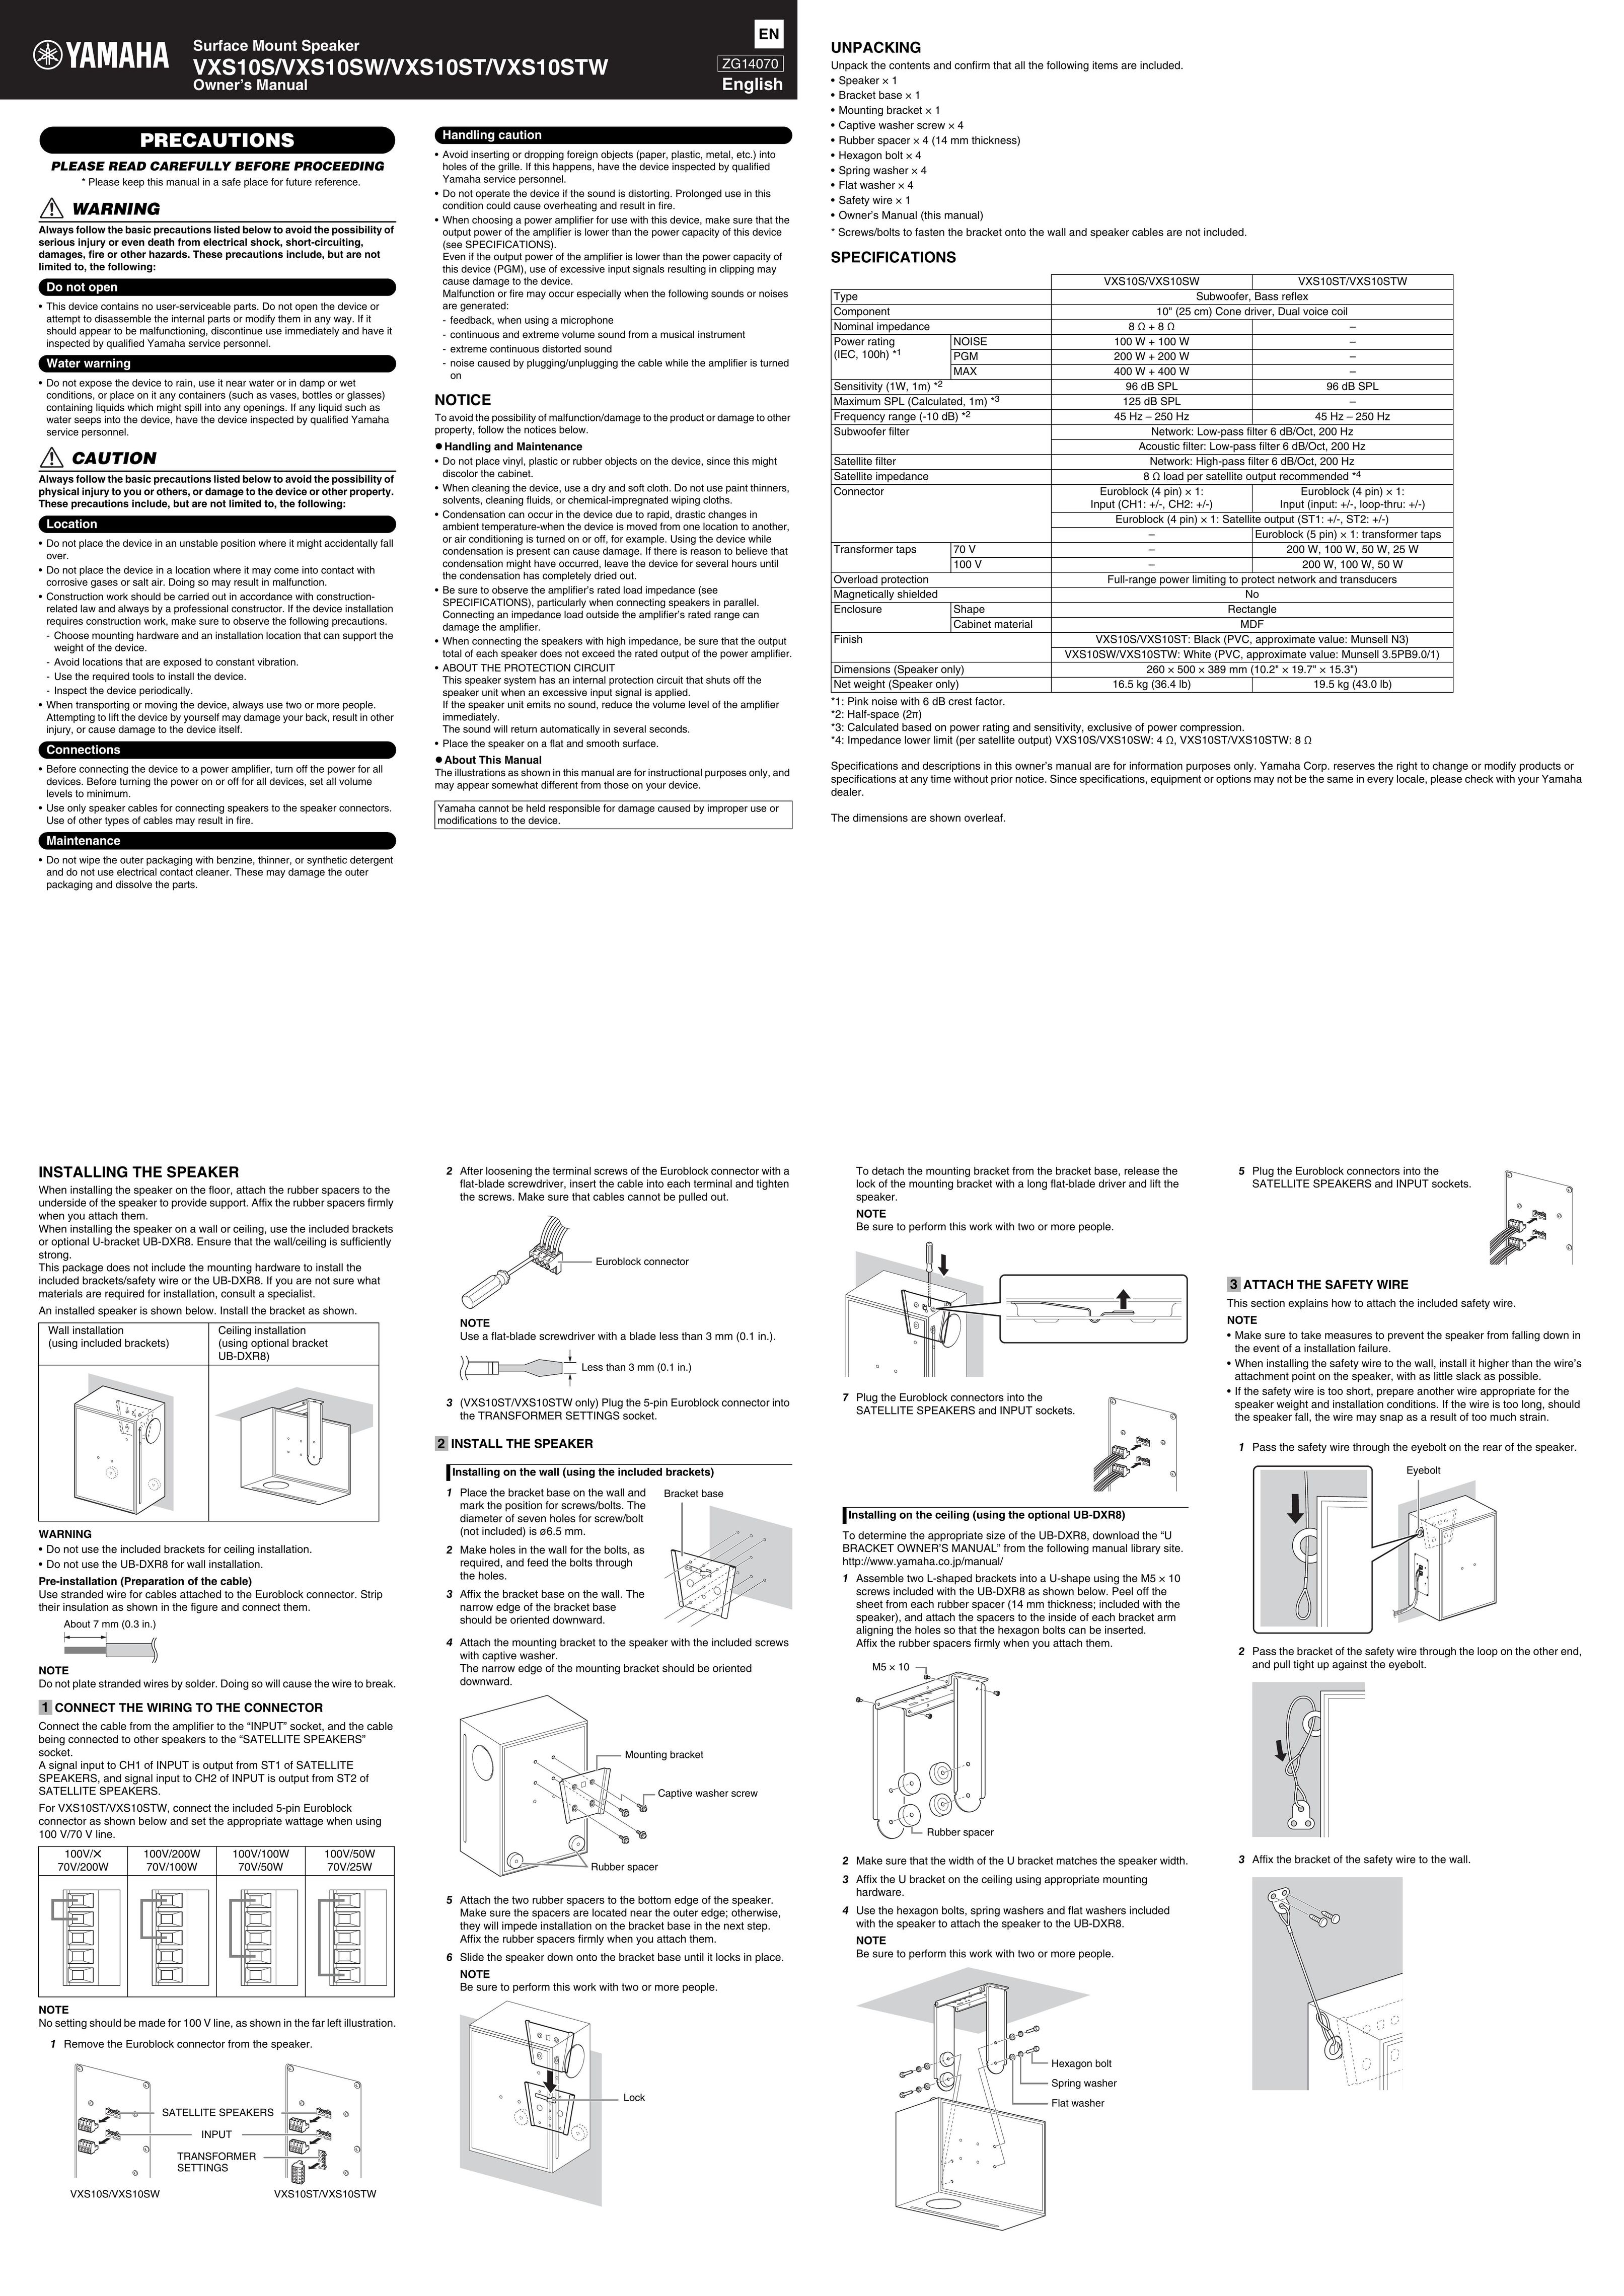 Yamaha VXS10STW Car Speaker User Manual